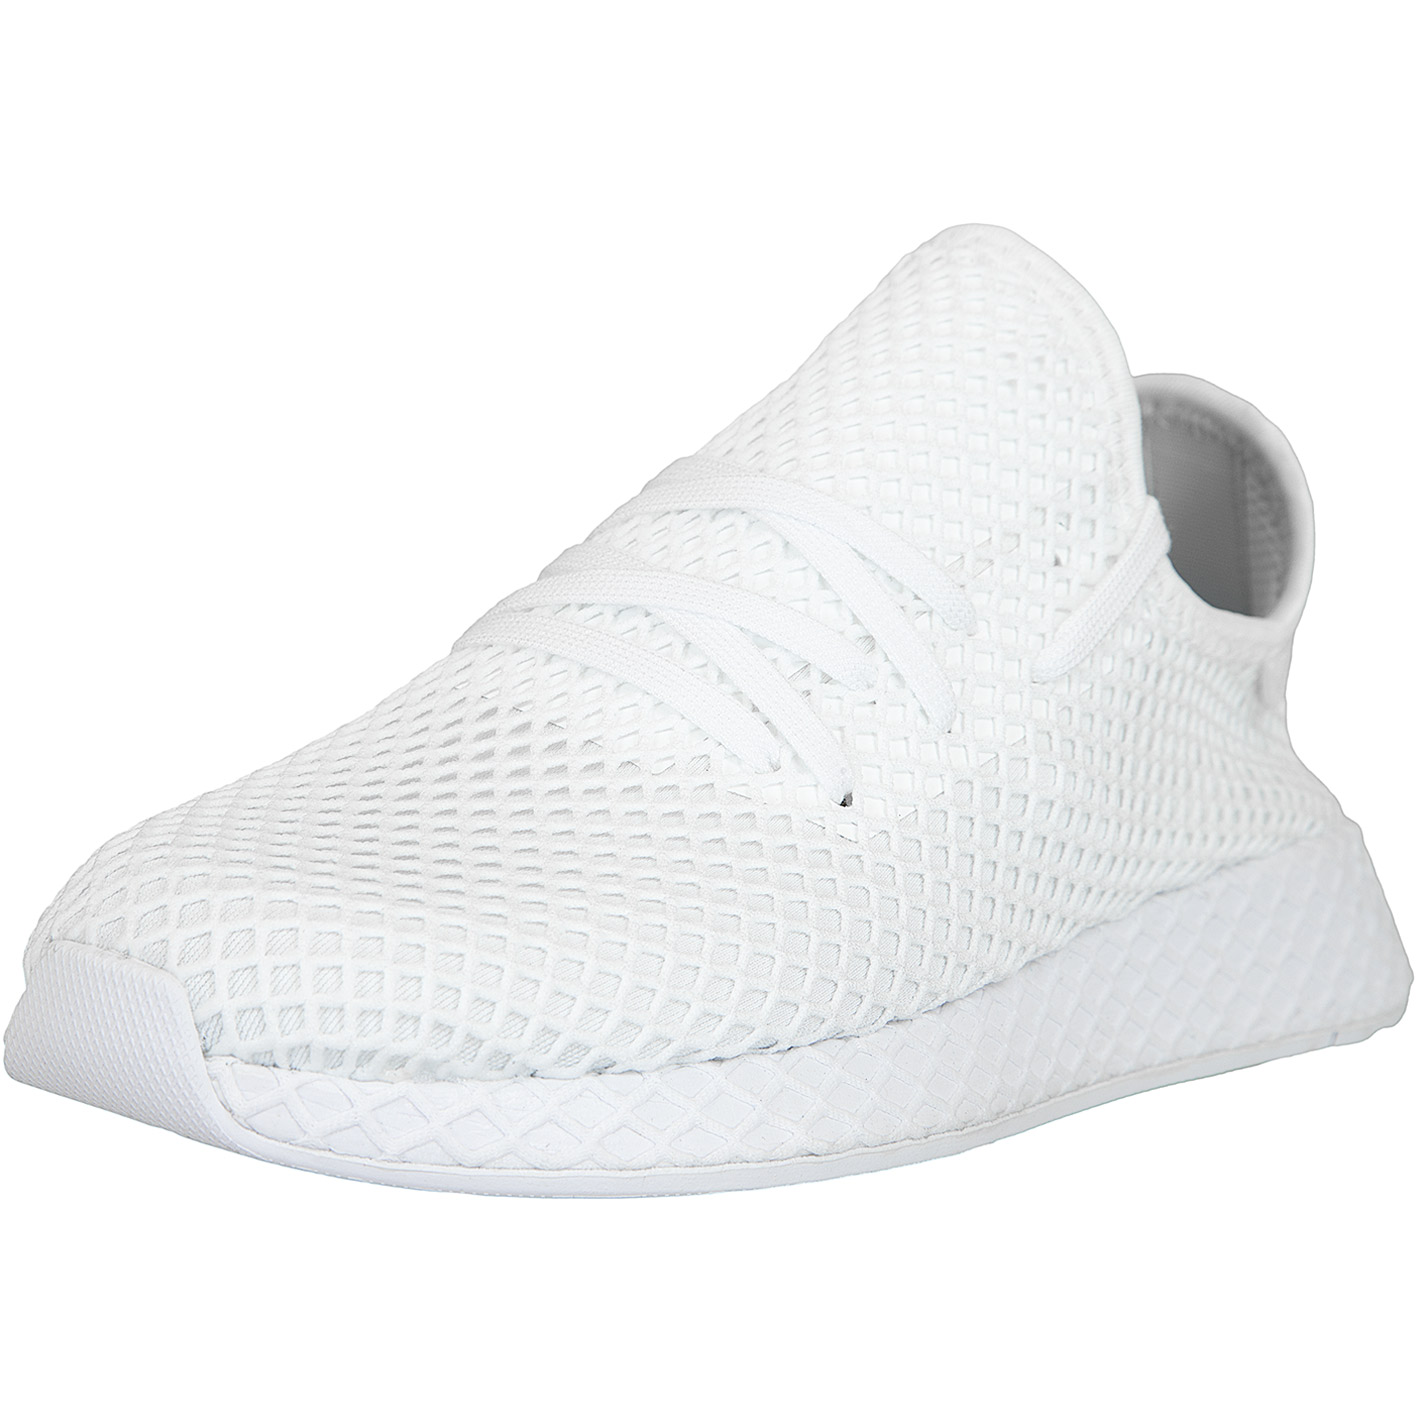 ☆ Adidas Originals Sneaker Deerupt Runner weiß/weiß - hier bestellen!